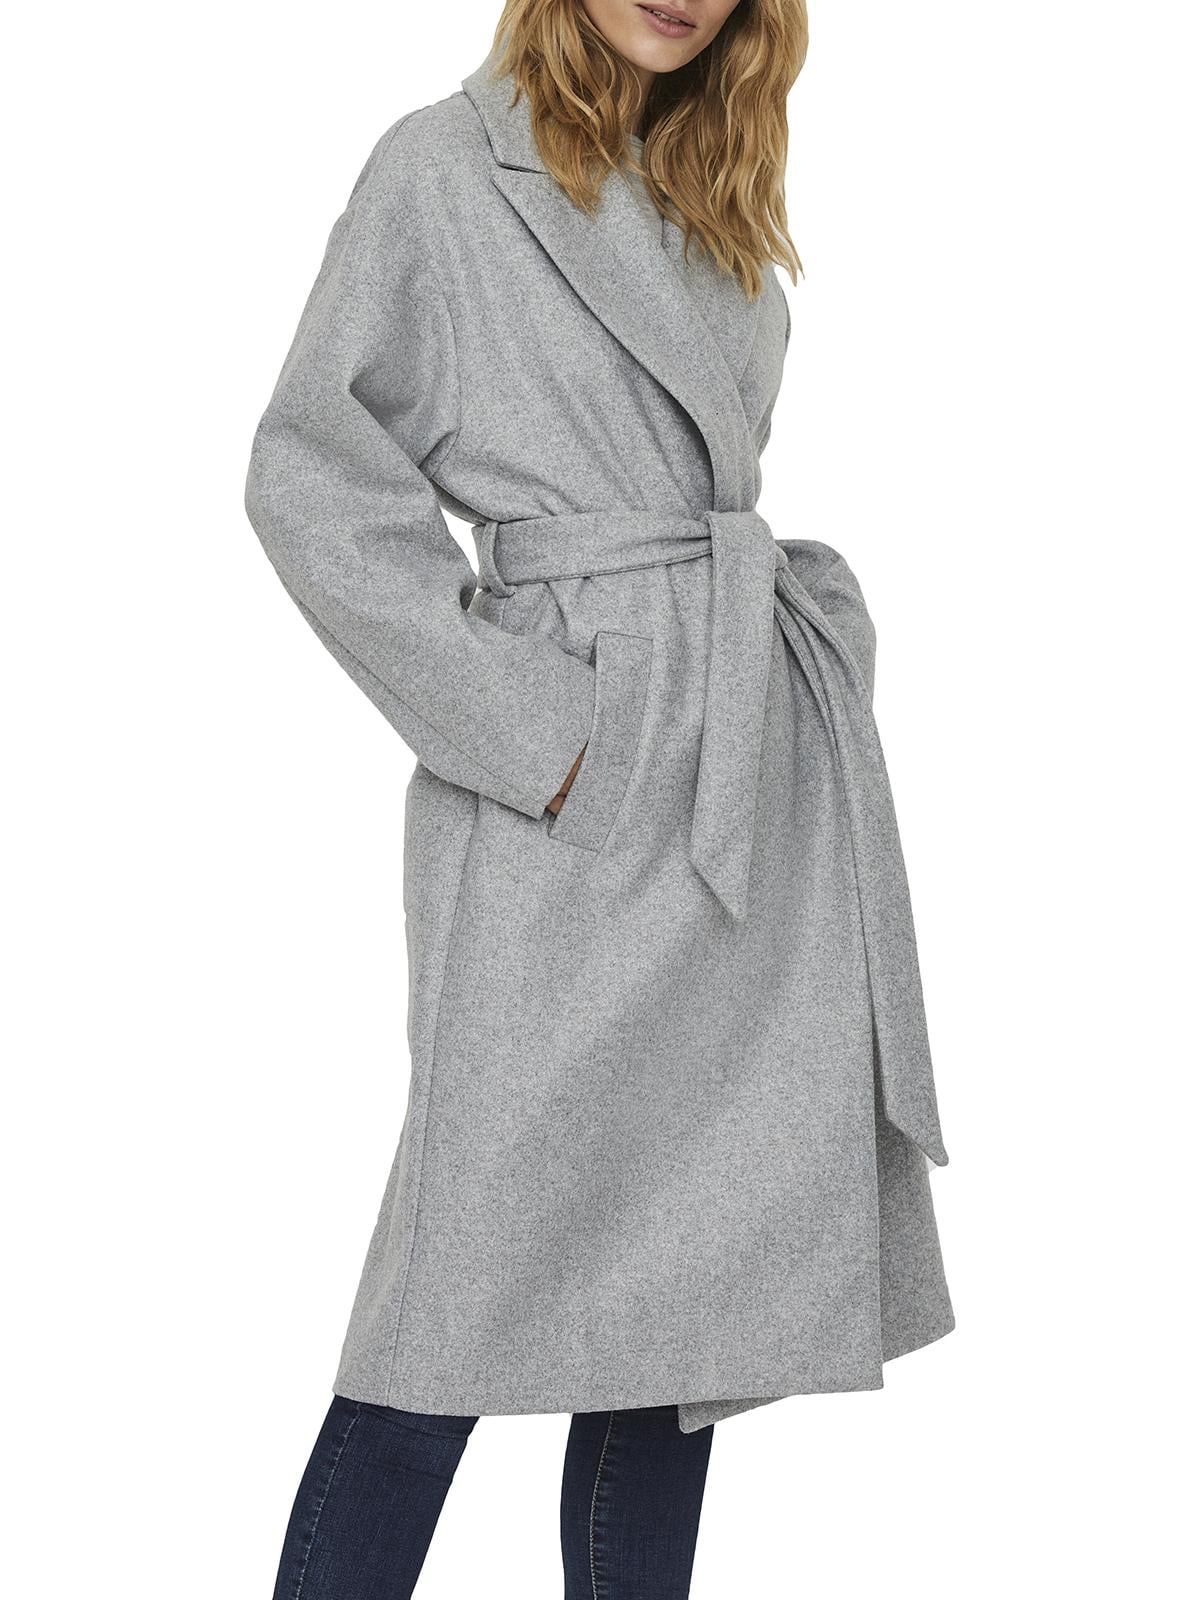 Vero Moda Fortune Lightweight Wrap Coat L - Walmart.com